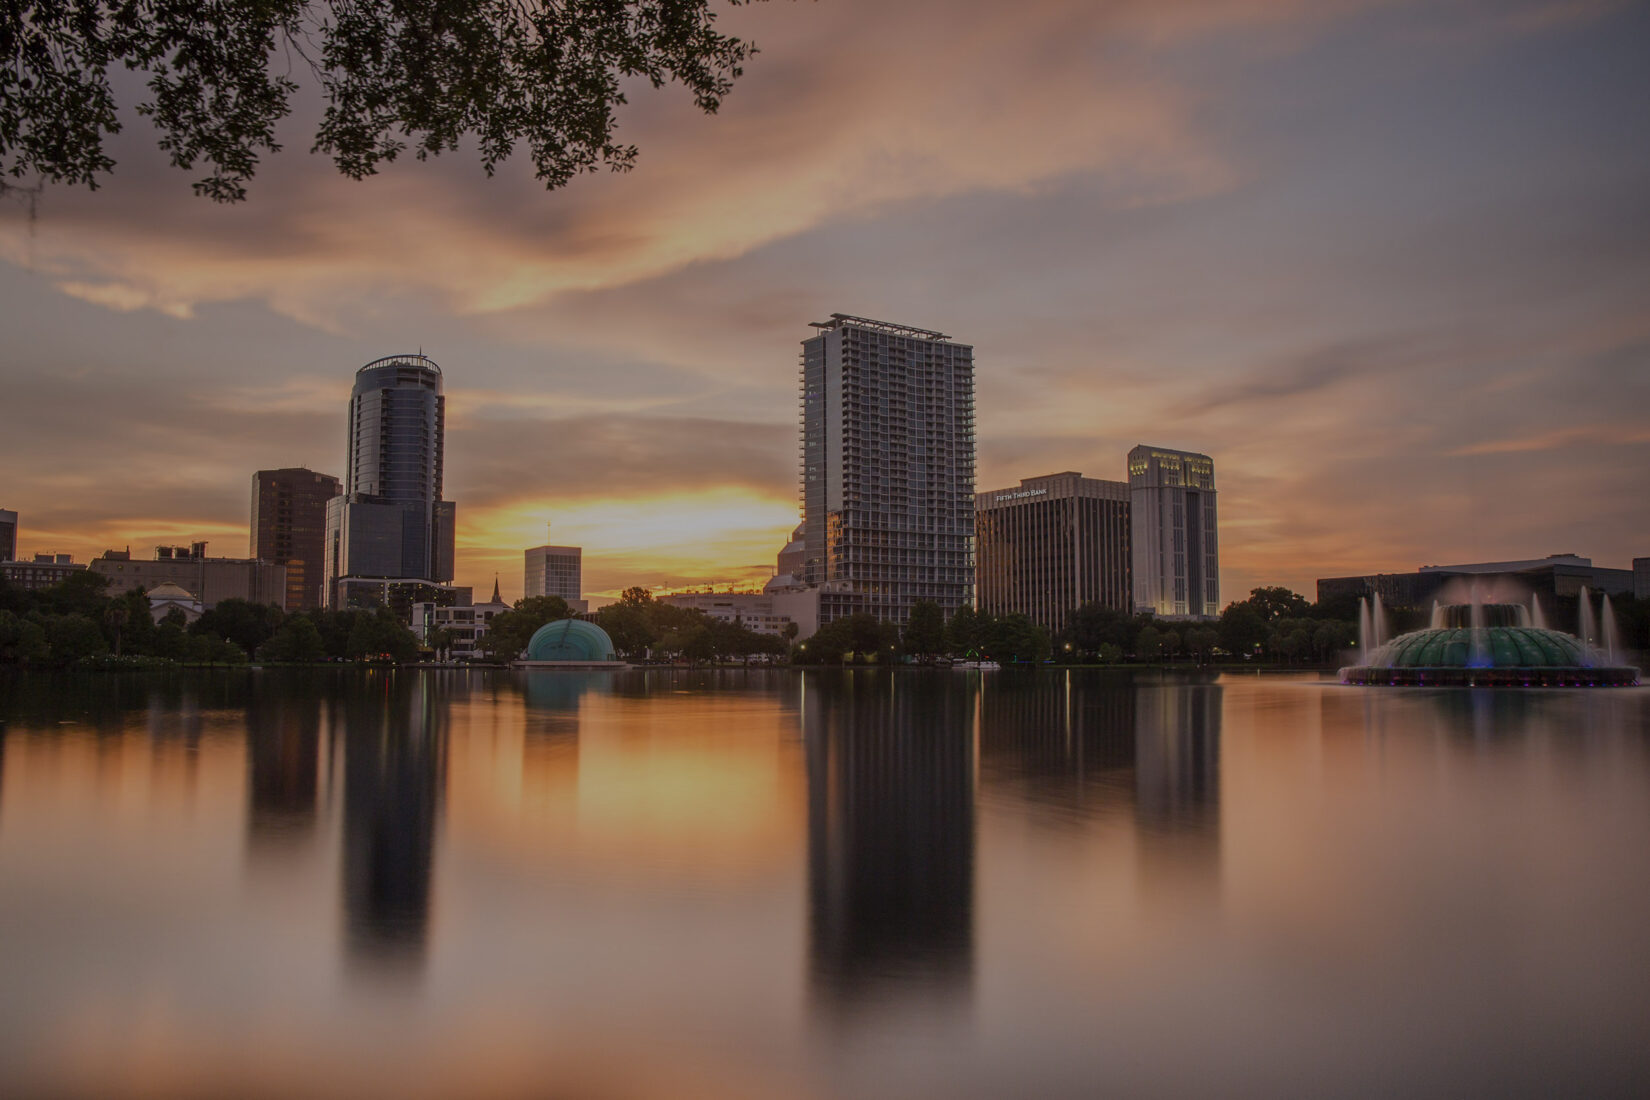 Downtown Orlando Lake Eola at sunset.